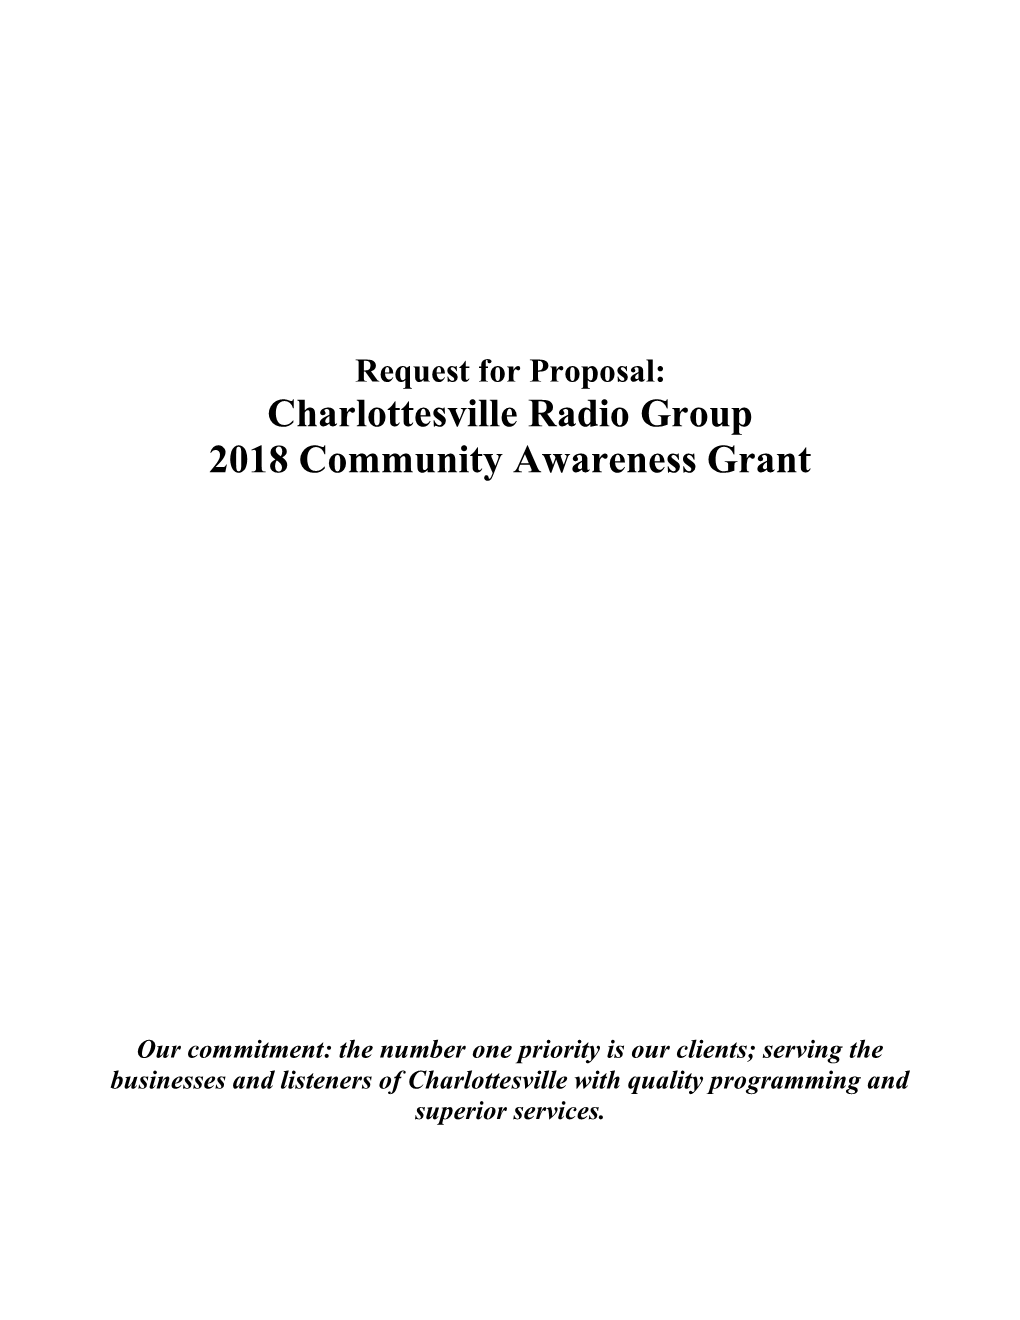 Charlottesville Radio Group 2018 Community Awareness Grant